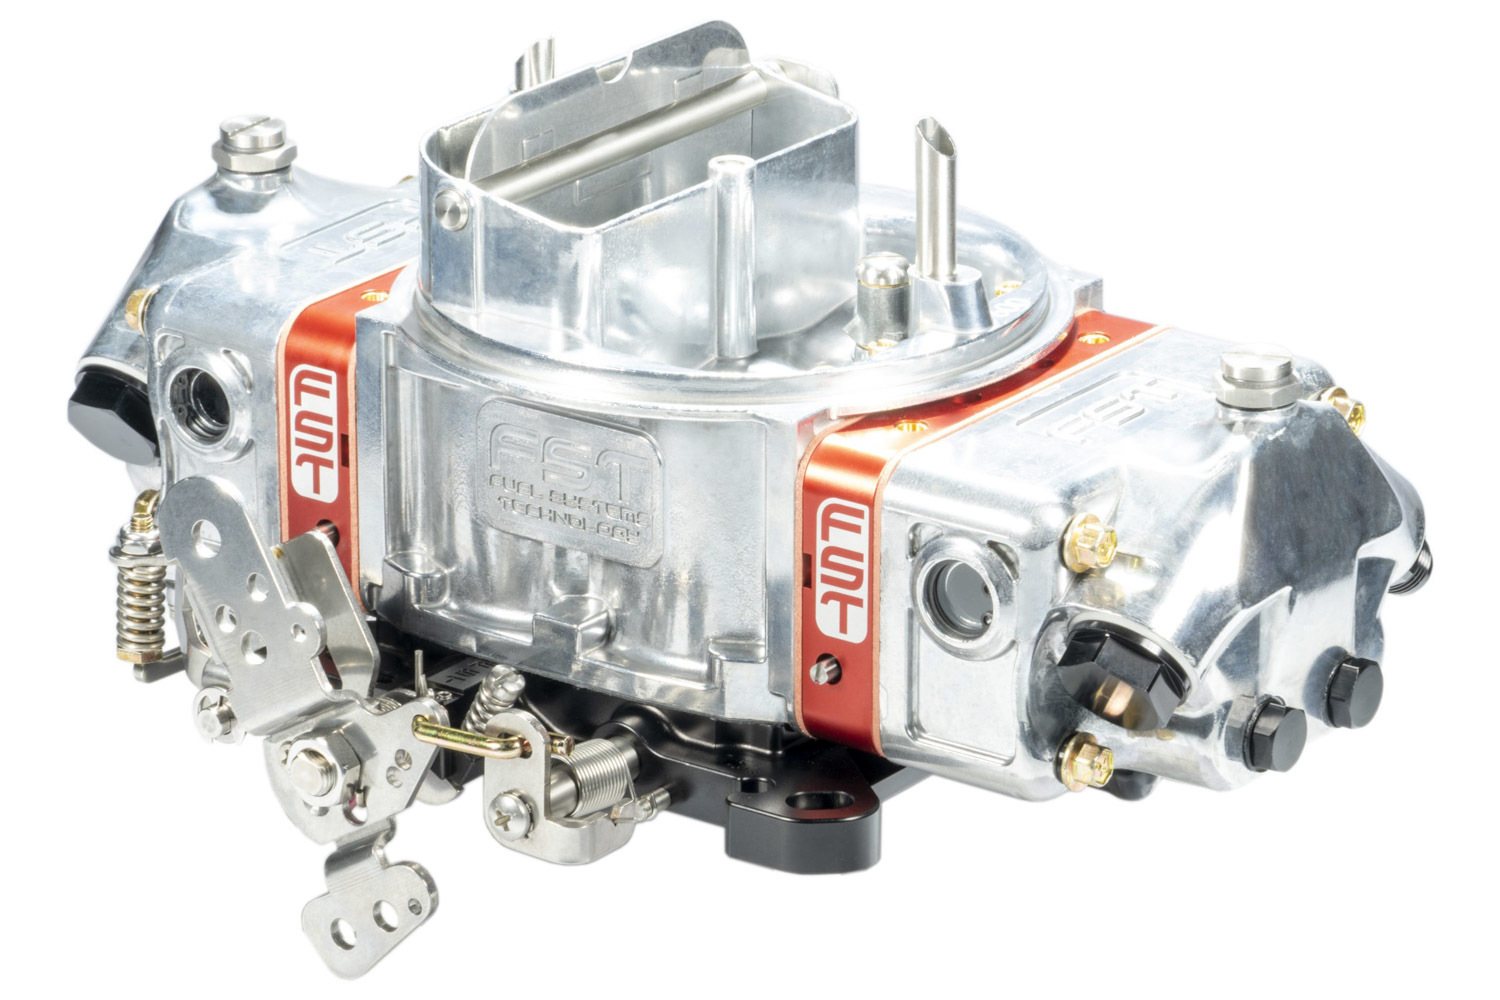 FST Carburetor 41600X-2 Carburetor, RT-X, 4-Barrel, 600 CFM, Square Bore, Electric Choke, Mechanical Secondary, Dual Inlet, Polished, Each